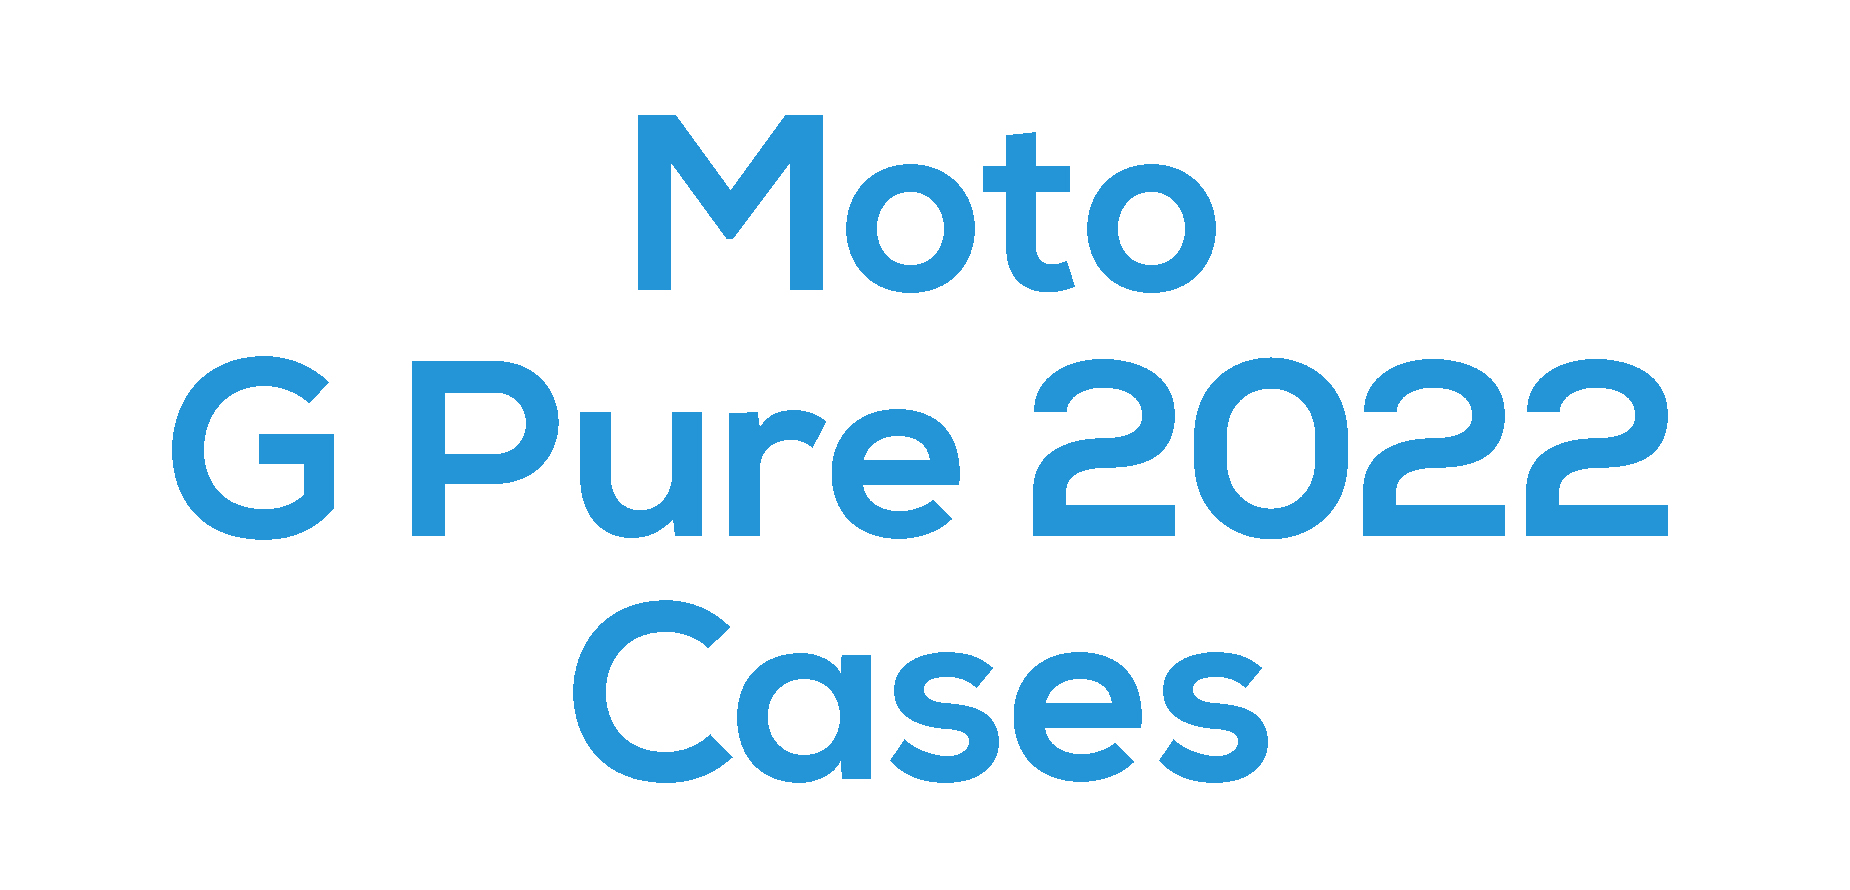 Moto G Pure 2022 Cases